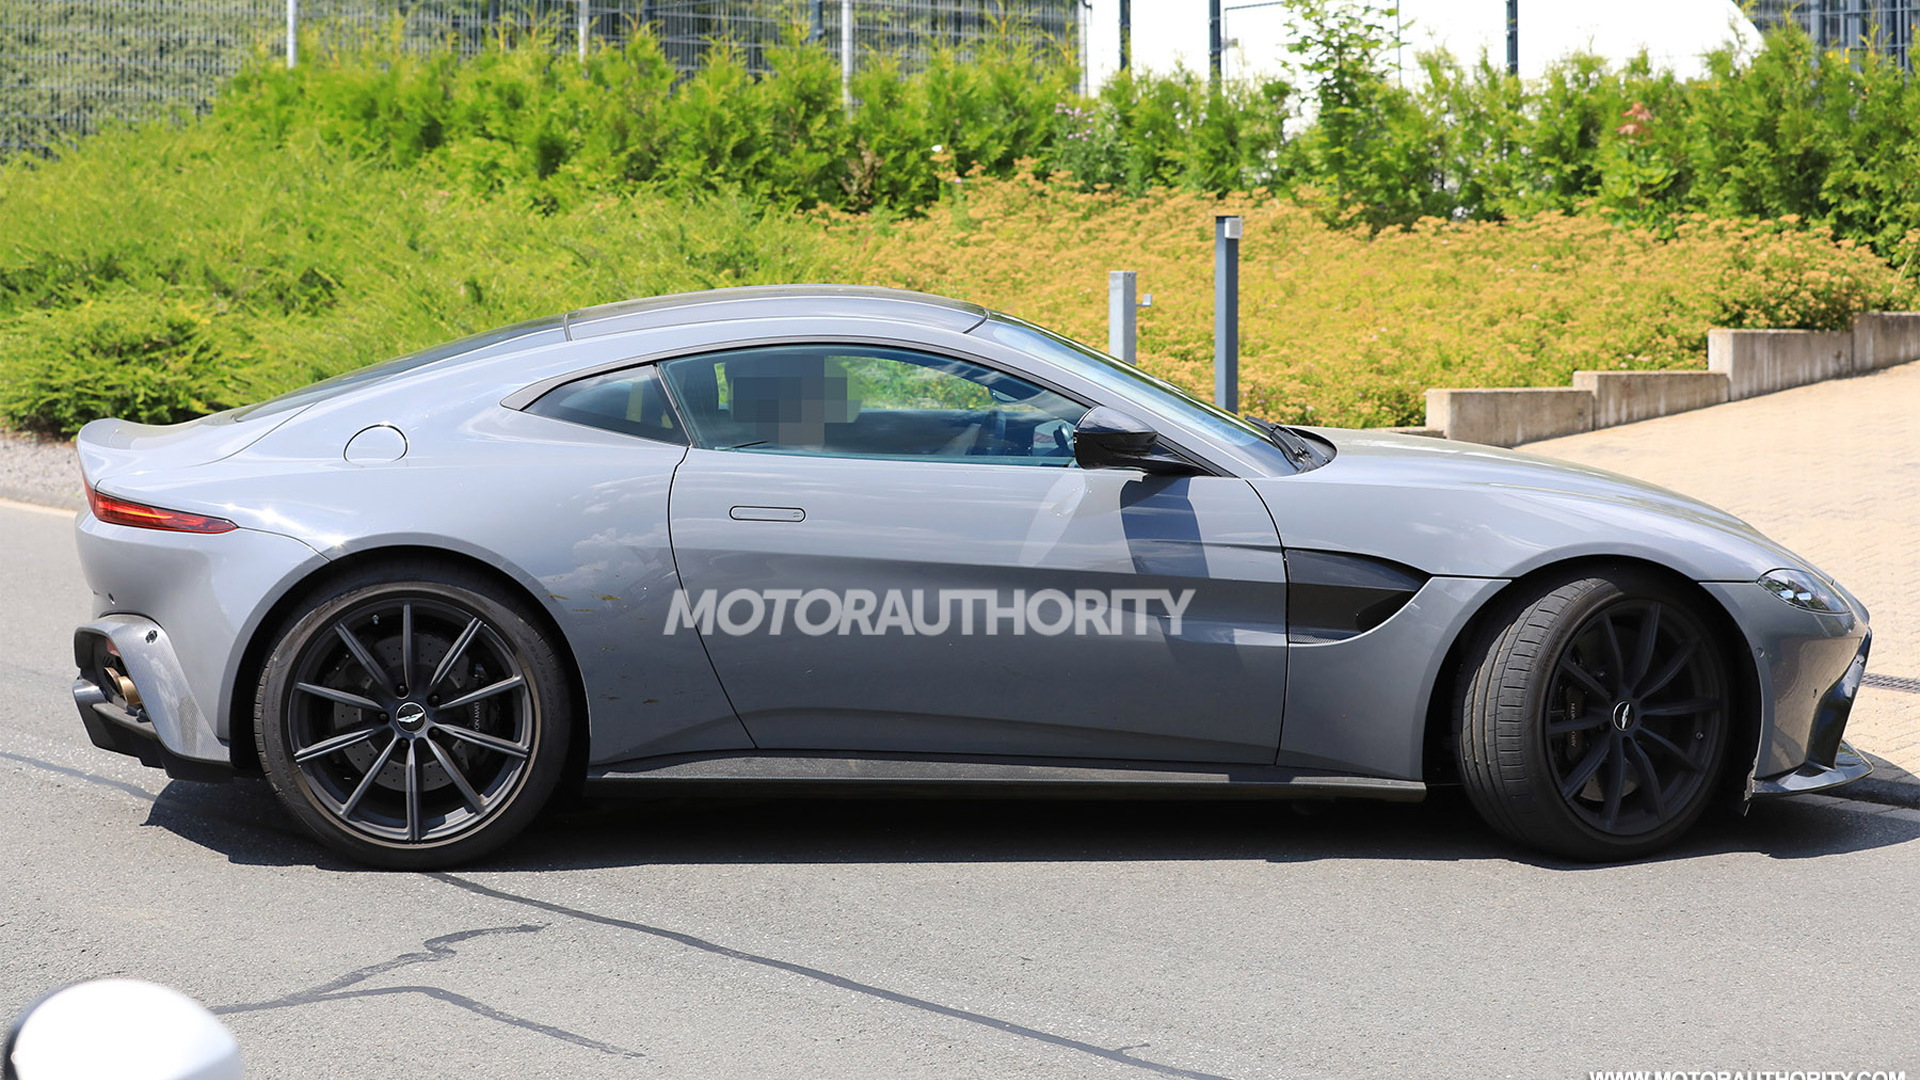 2020 Aston Martin Vantage test mule spy shots - Image via S. Baldauf/SB-Medien